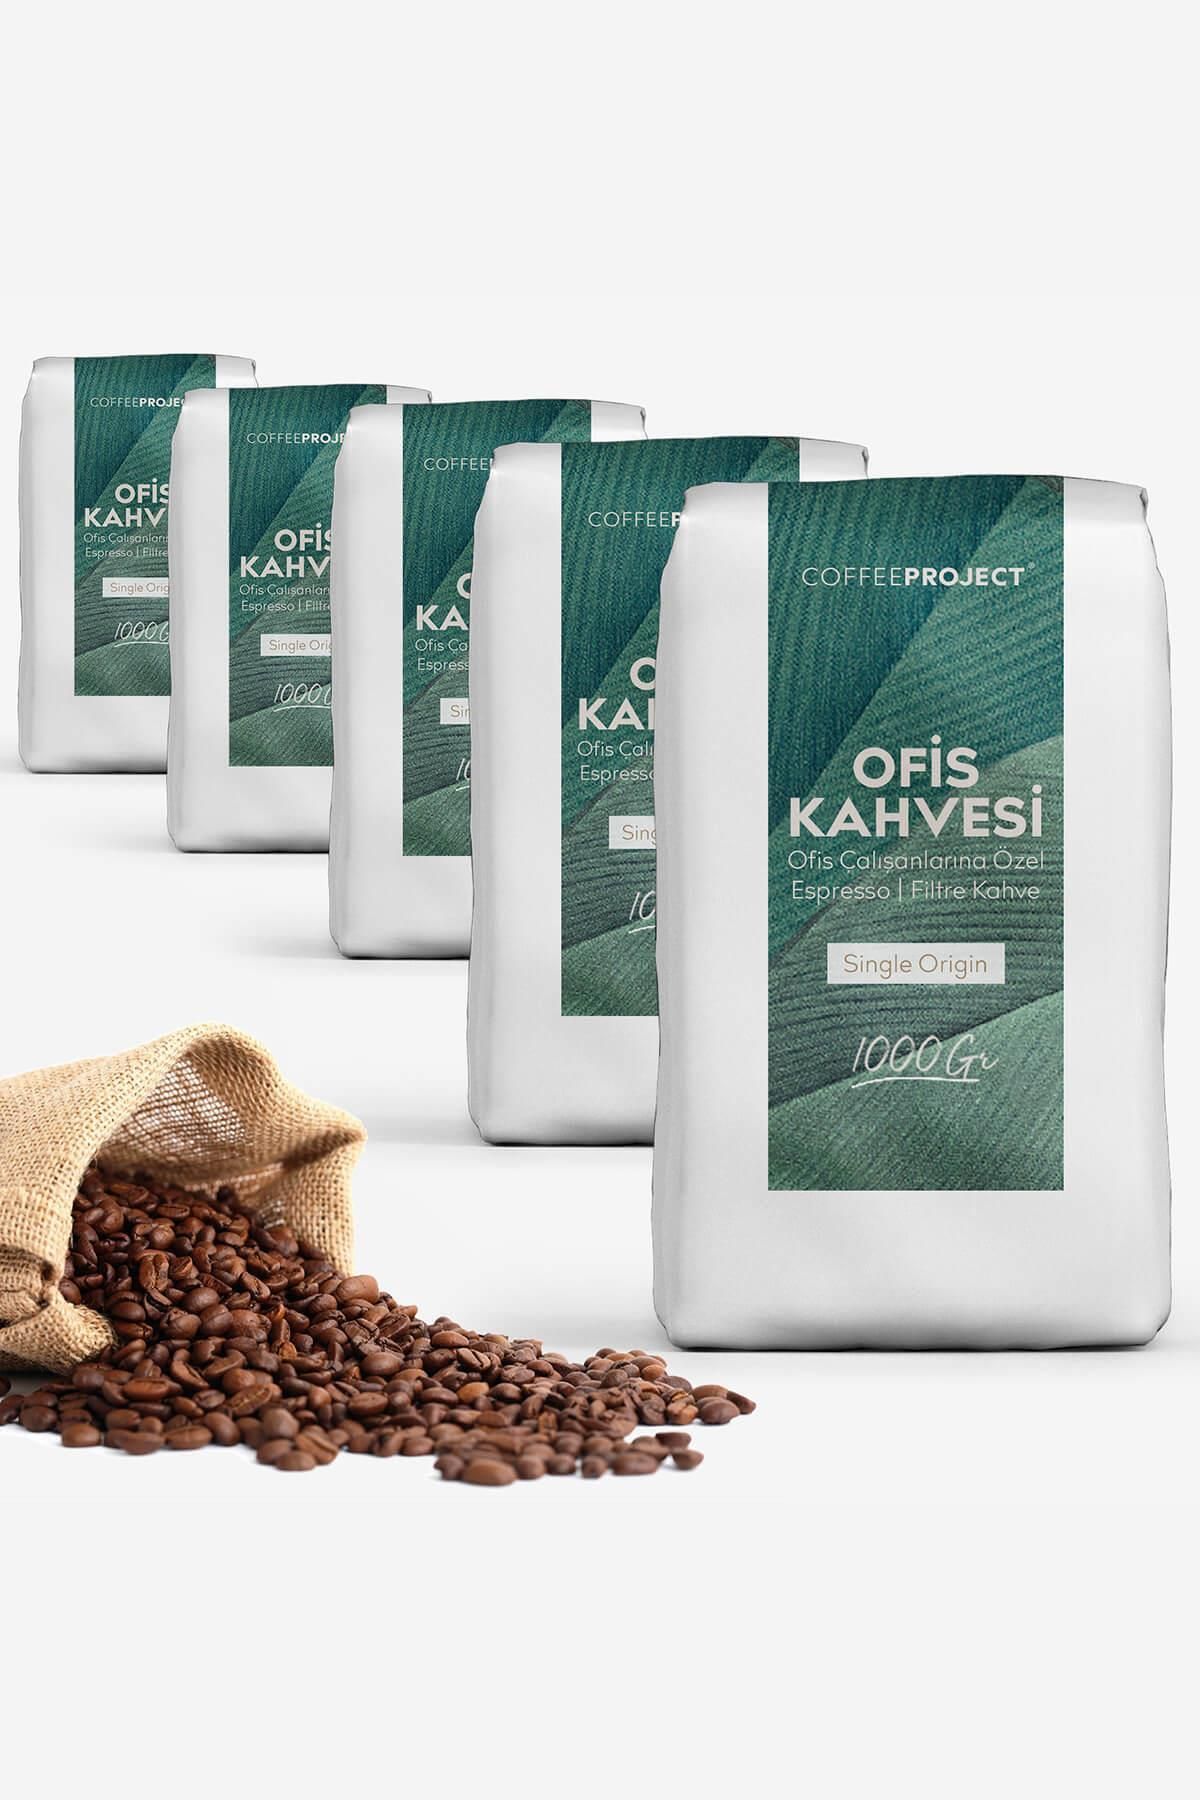 Coffee Project 5 Kg Ofis Kahvesi Filtre / Espresso Için Uygun